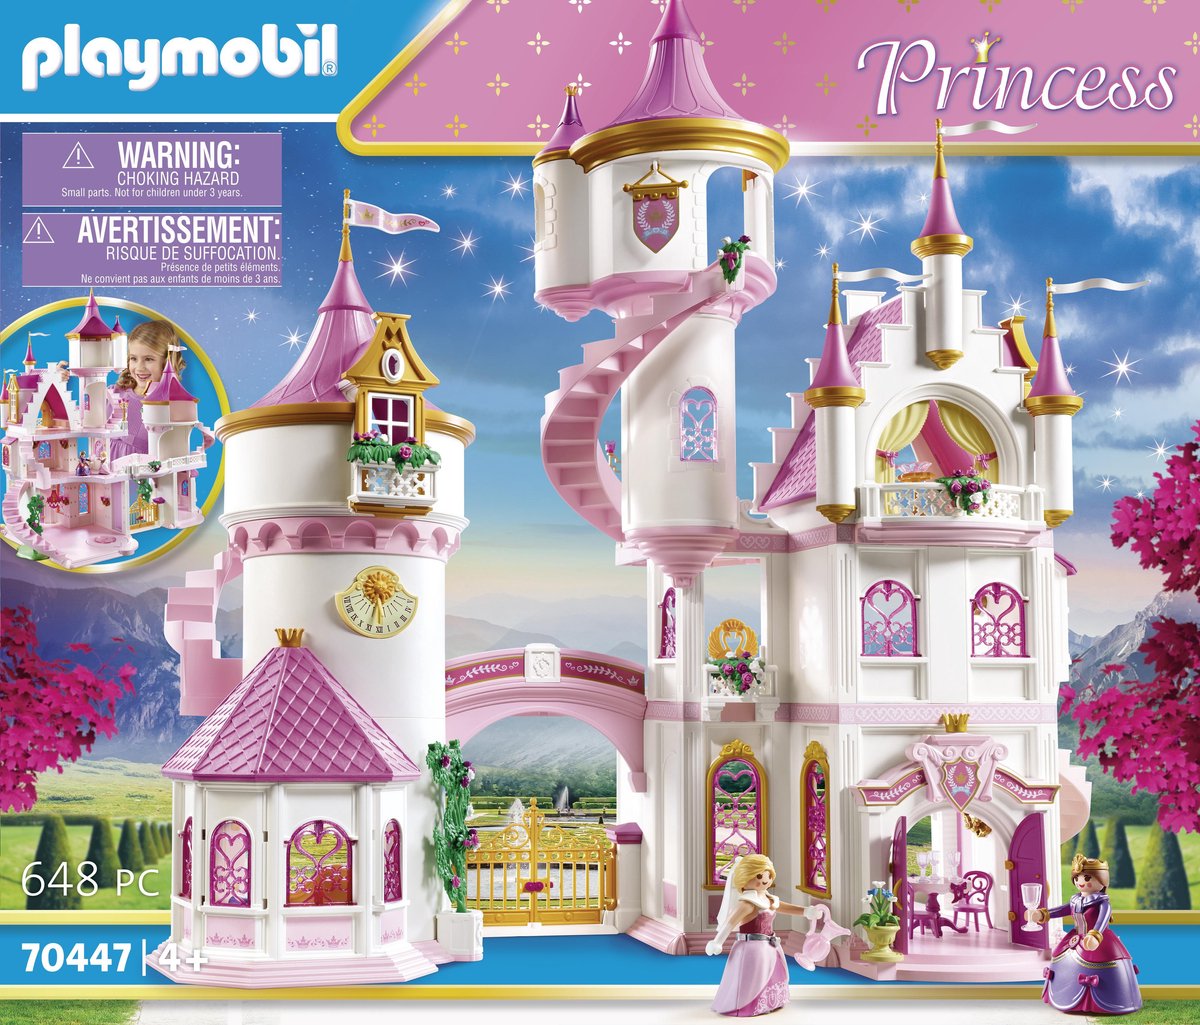 PLAYMOBIL Princess Groot Prinsessenkasteel - 70447 | bol.com